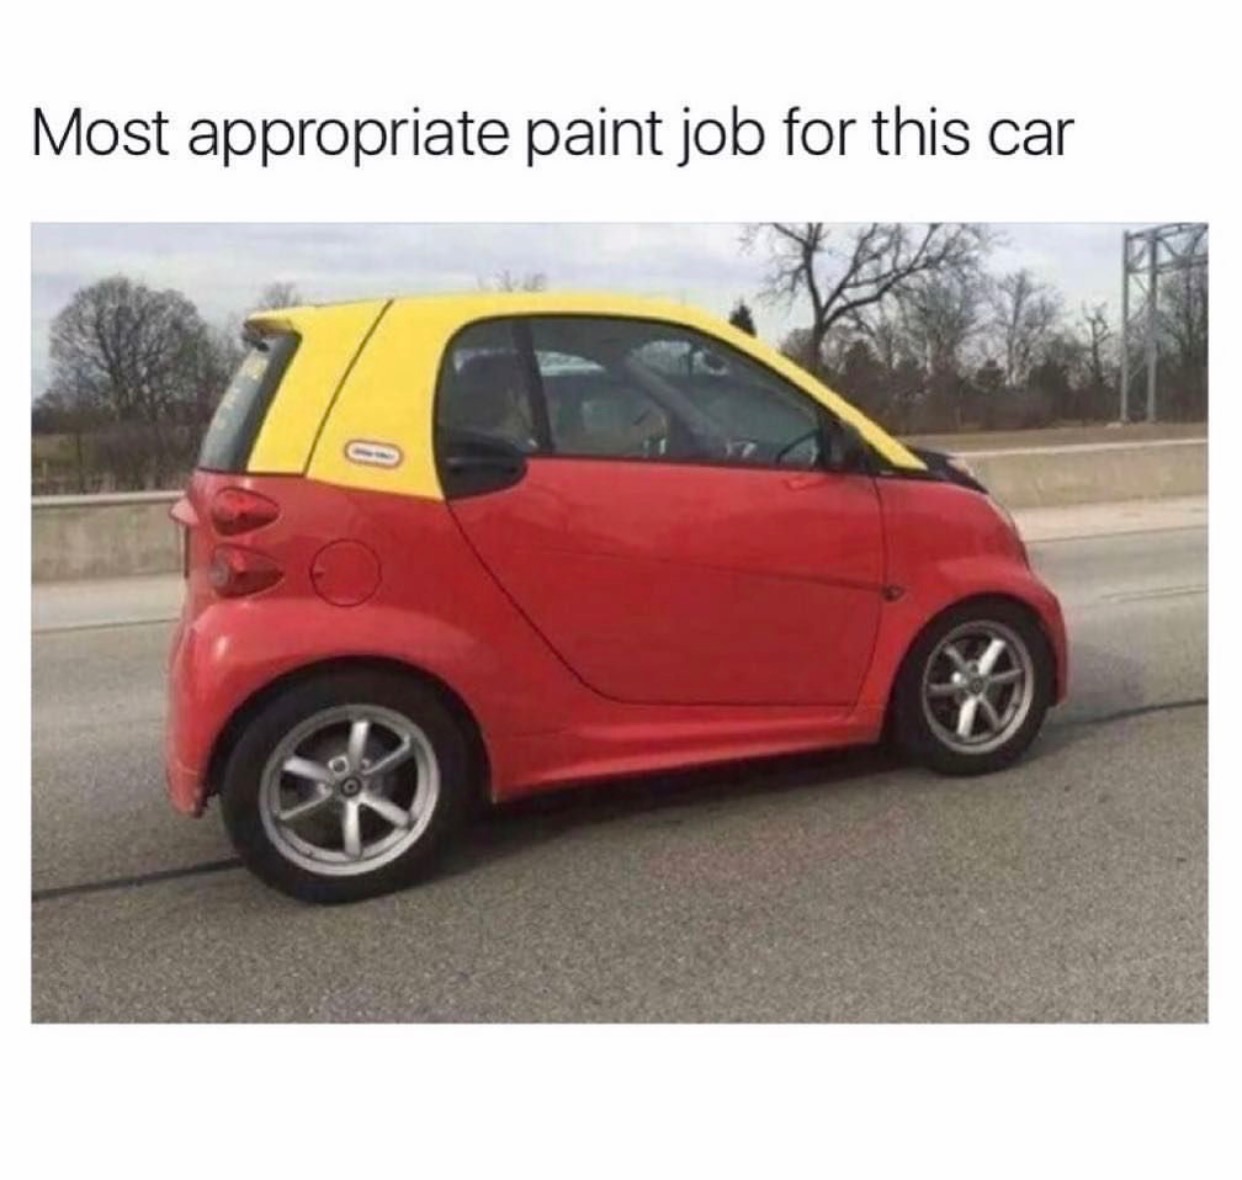 memes - dank car memes - Most appropriate paint job for this car